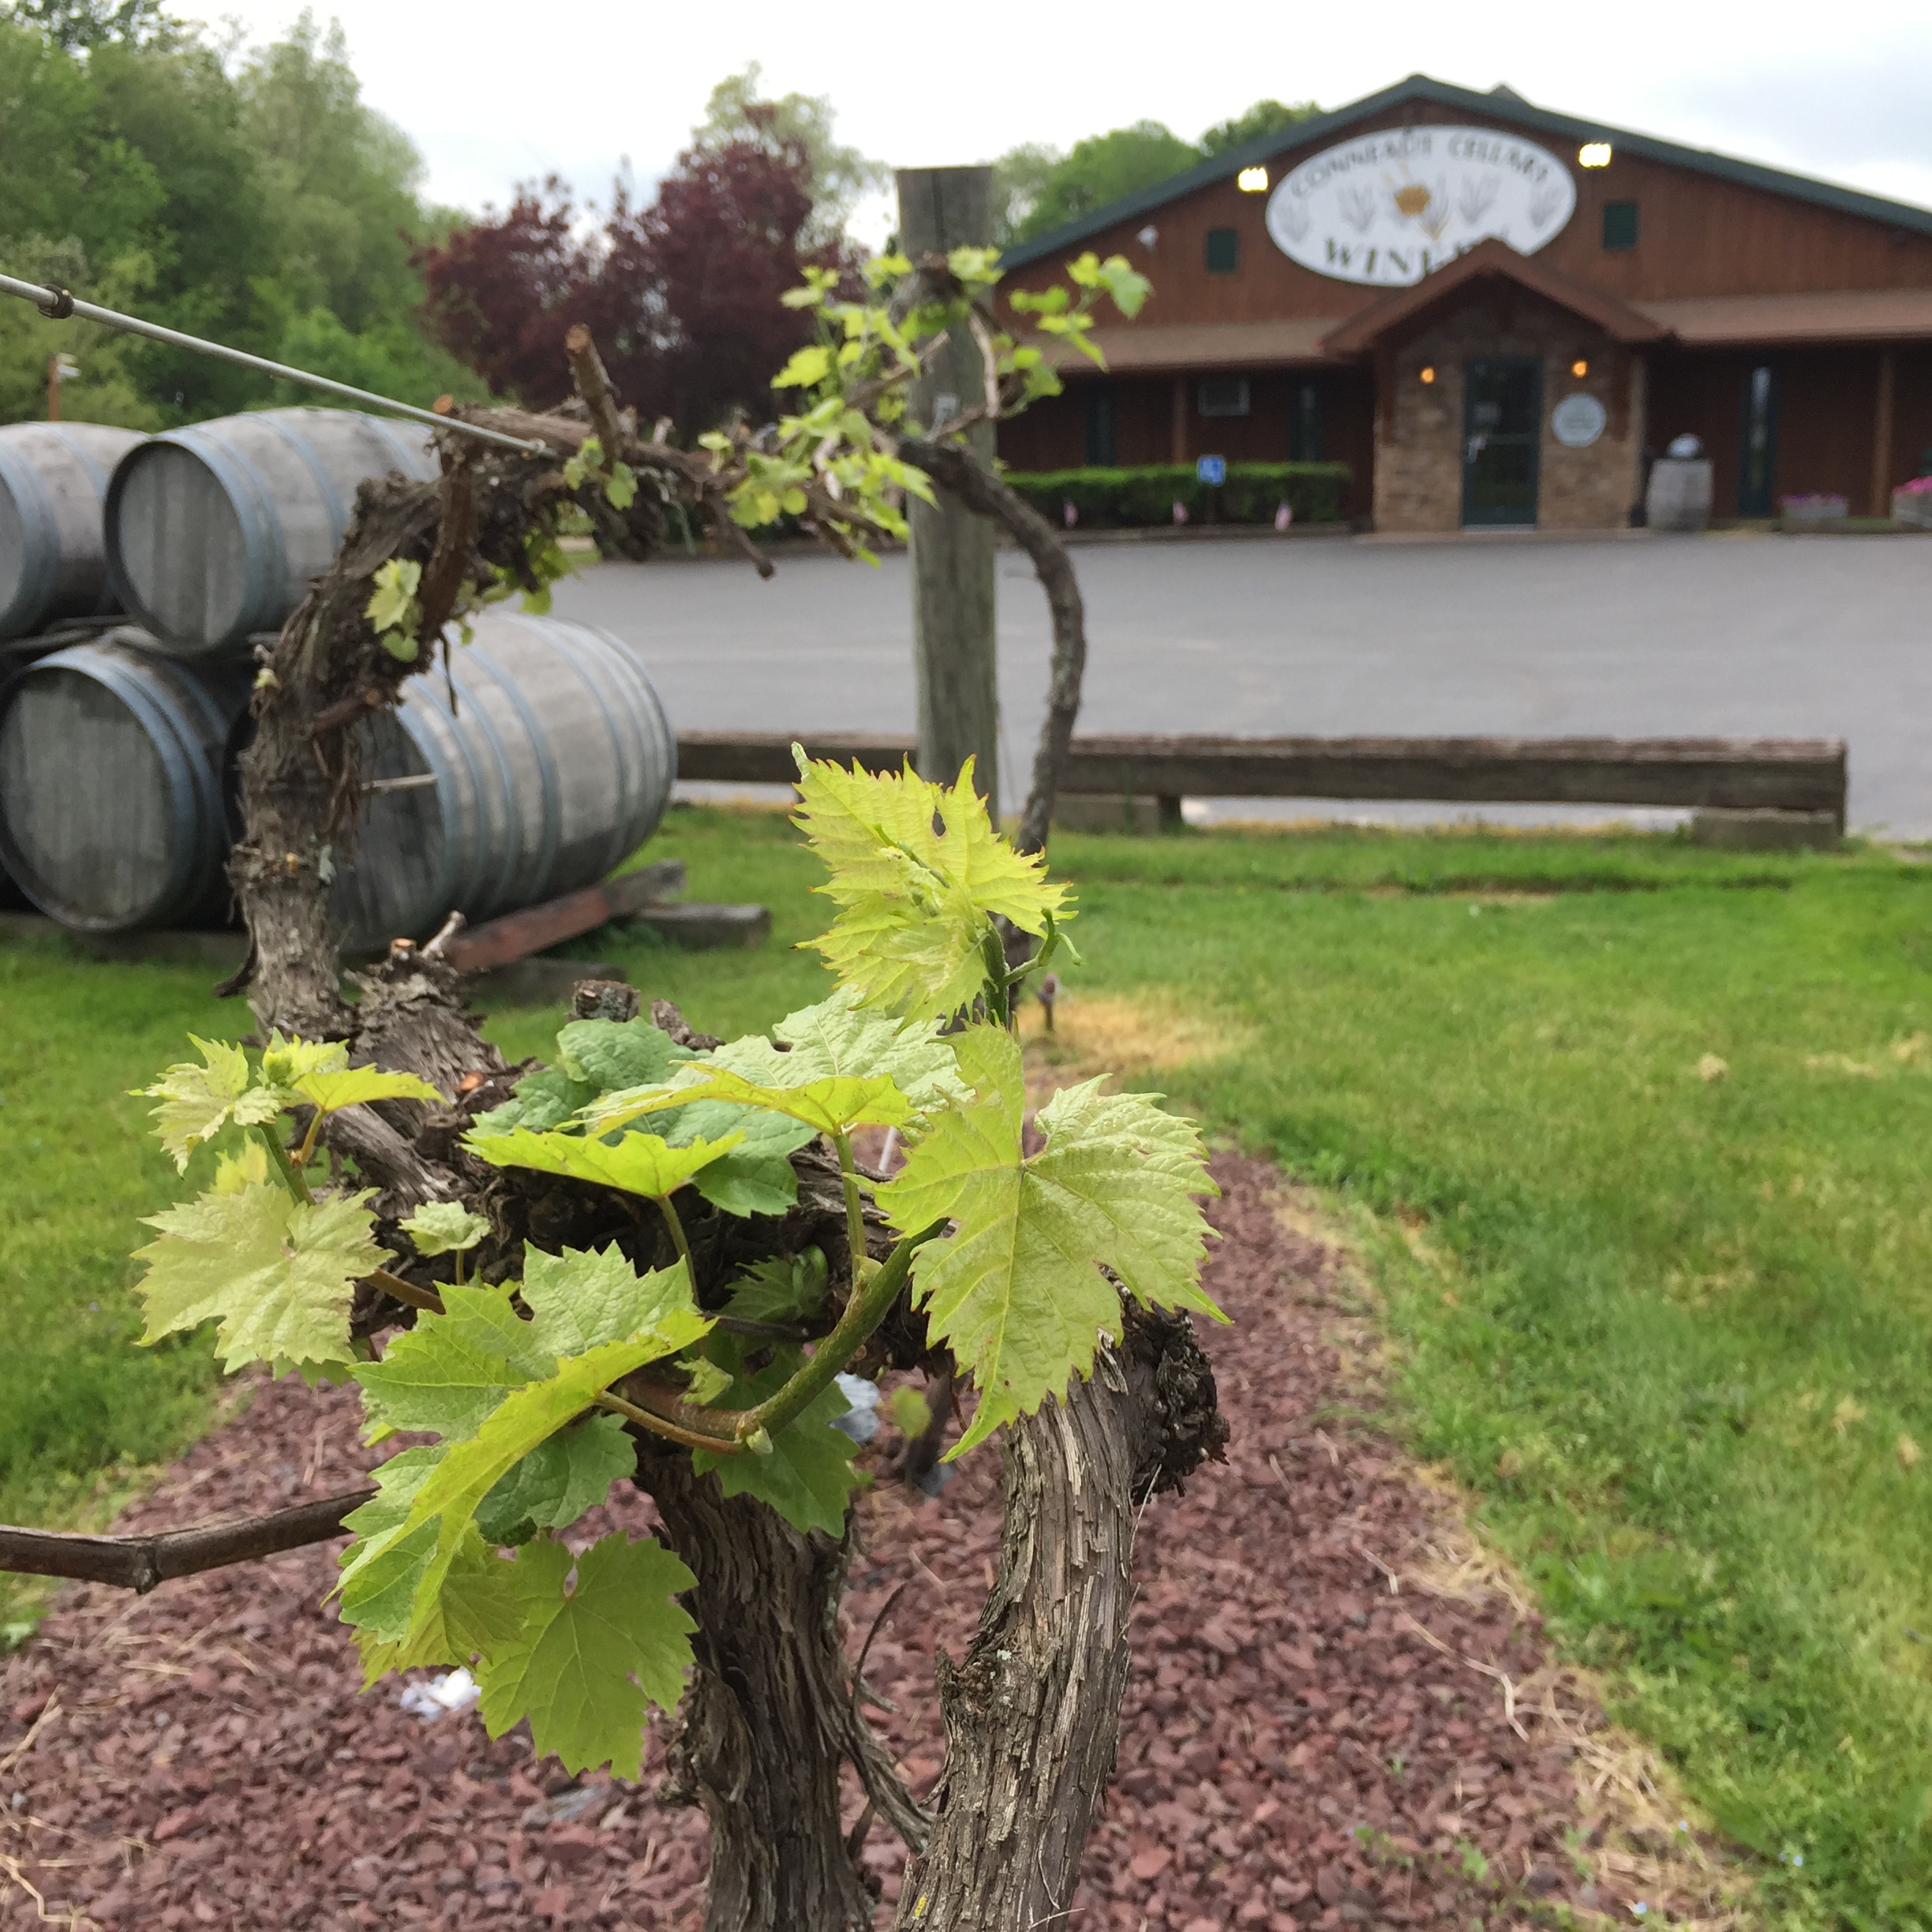 Grape vines growing at Conneaut Cellars Winery & Distillery facility at 12005 Conneaut Lake Road, Conneaut Lake, PA  16316.